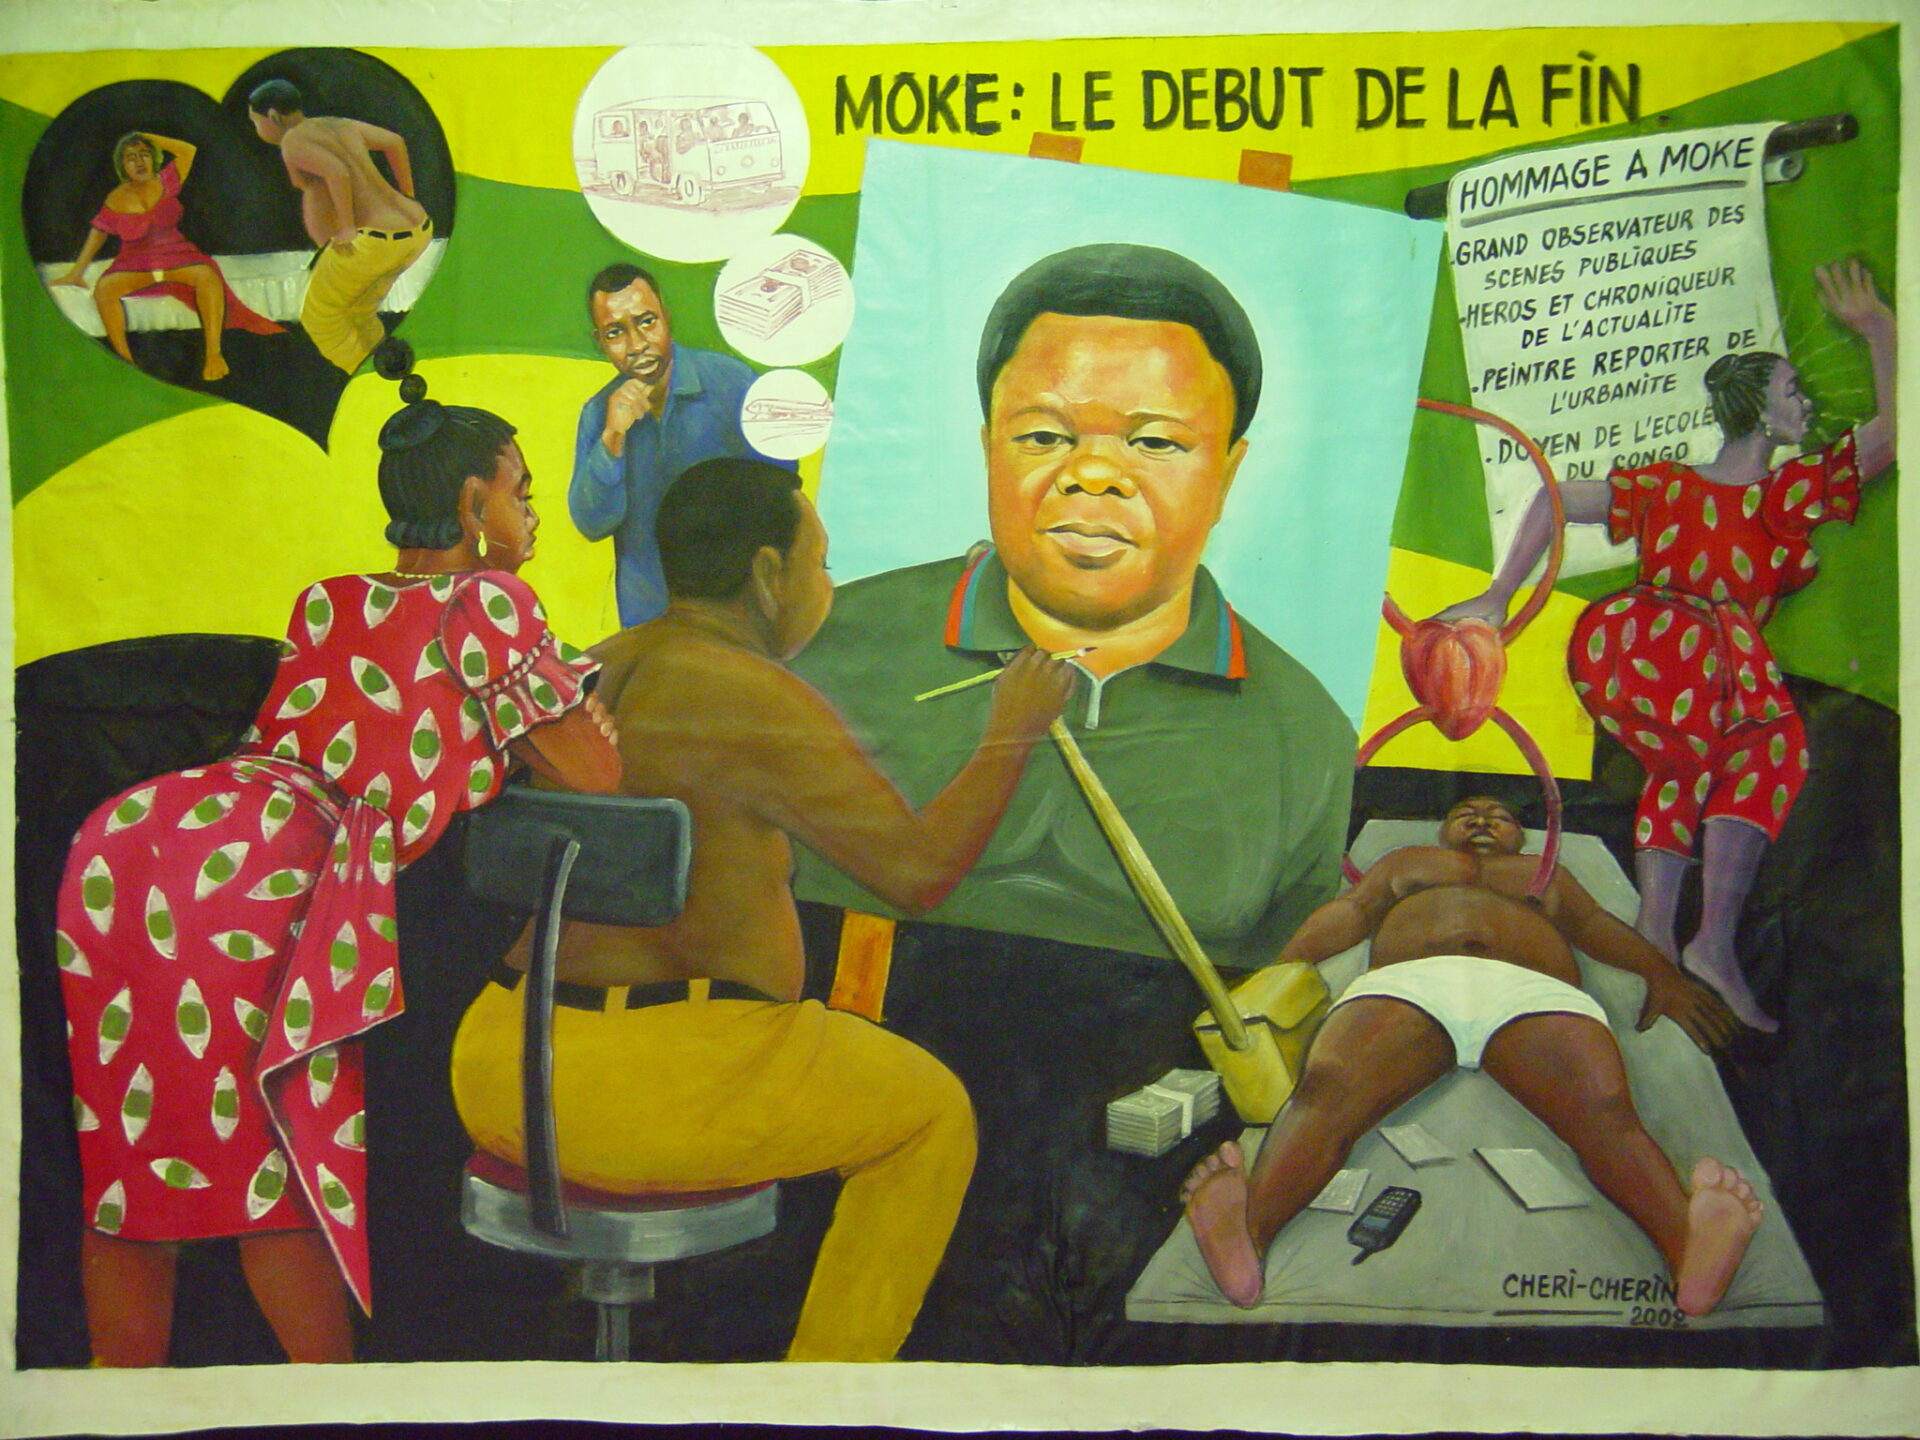 Chéri Cherin, Kinshasa, 2002, Moke : poczatek konca, Collection MRAC Tervuren, Fonds B. Jewsiewicki 